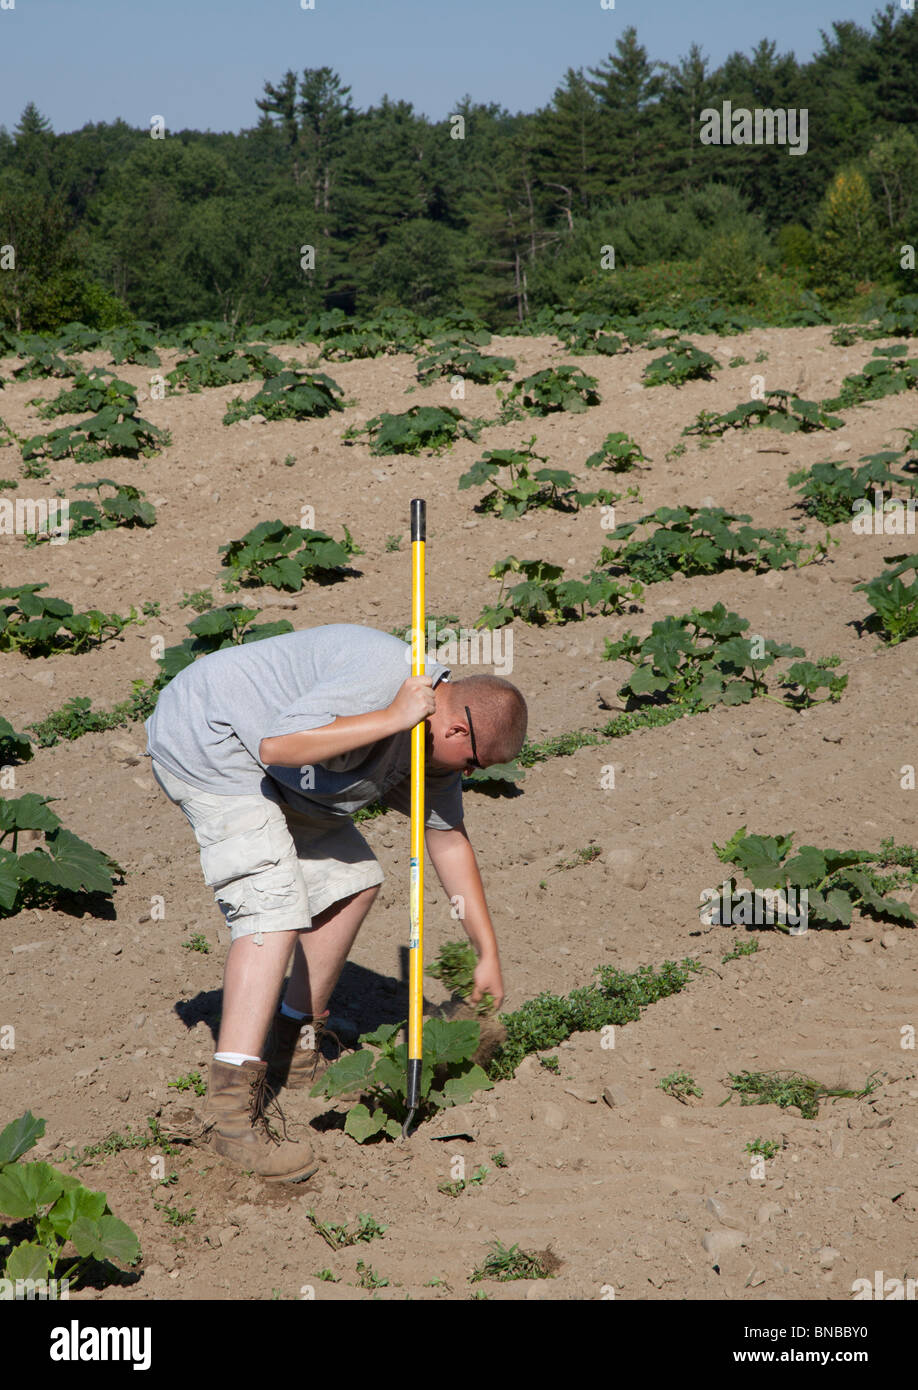 Groton, Massachusetts - A farmer uses a hoe to weed a pumpkin field. Stock Photo